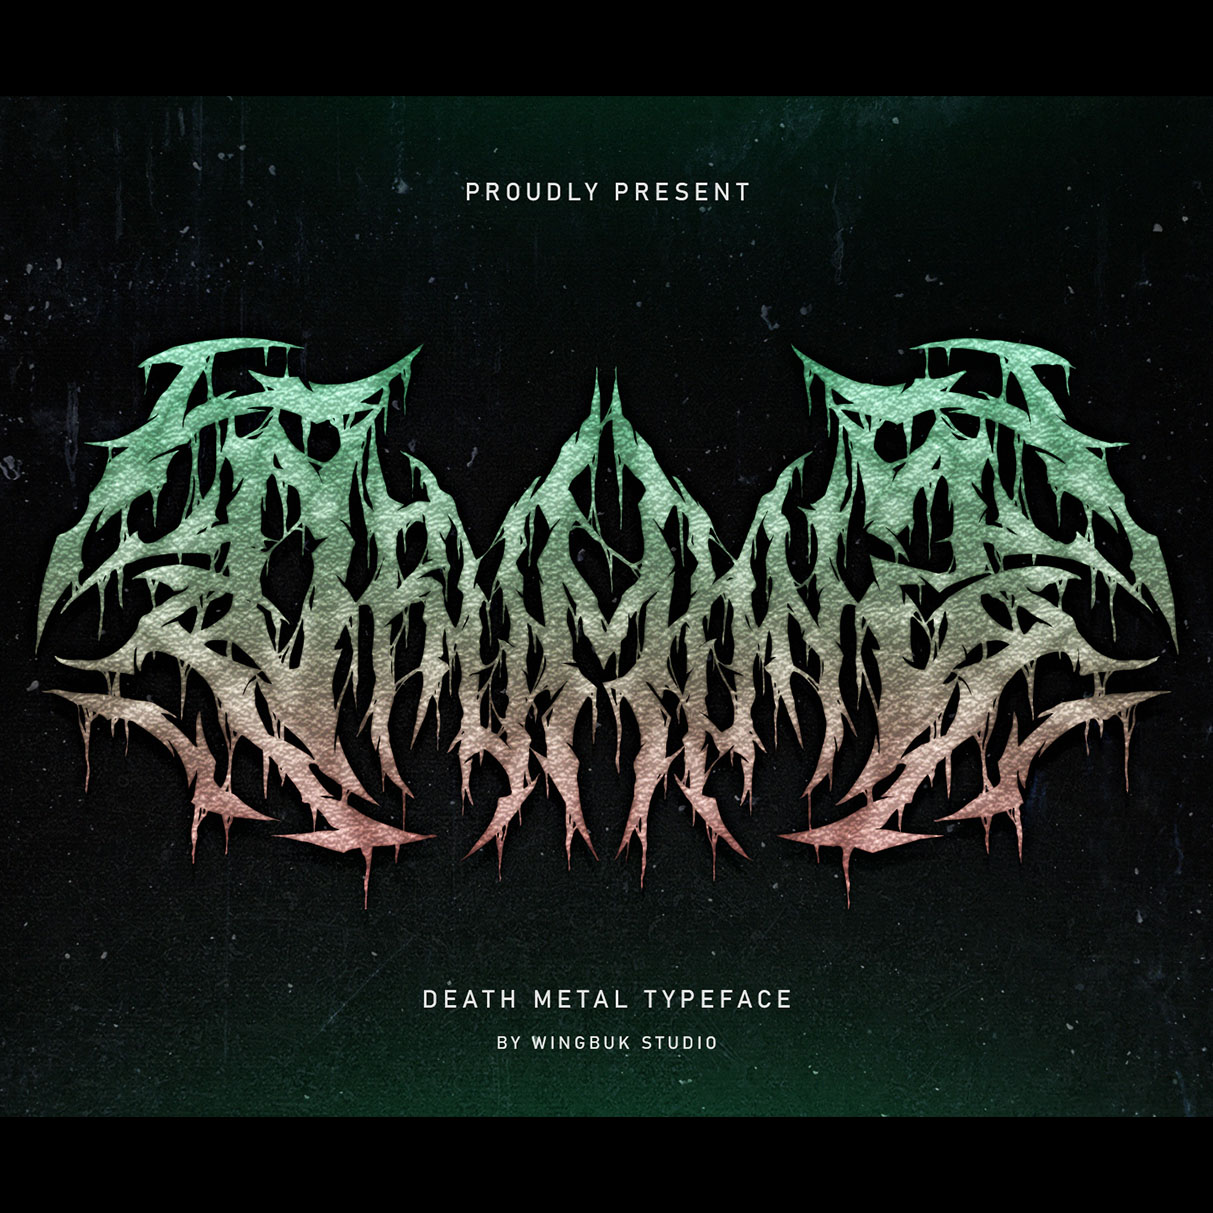 Drumonz | Death Metal Font cover image.